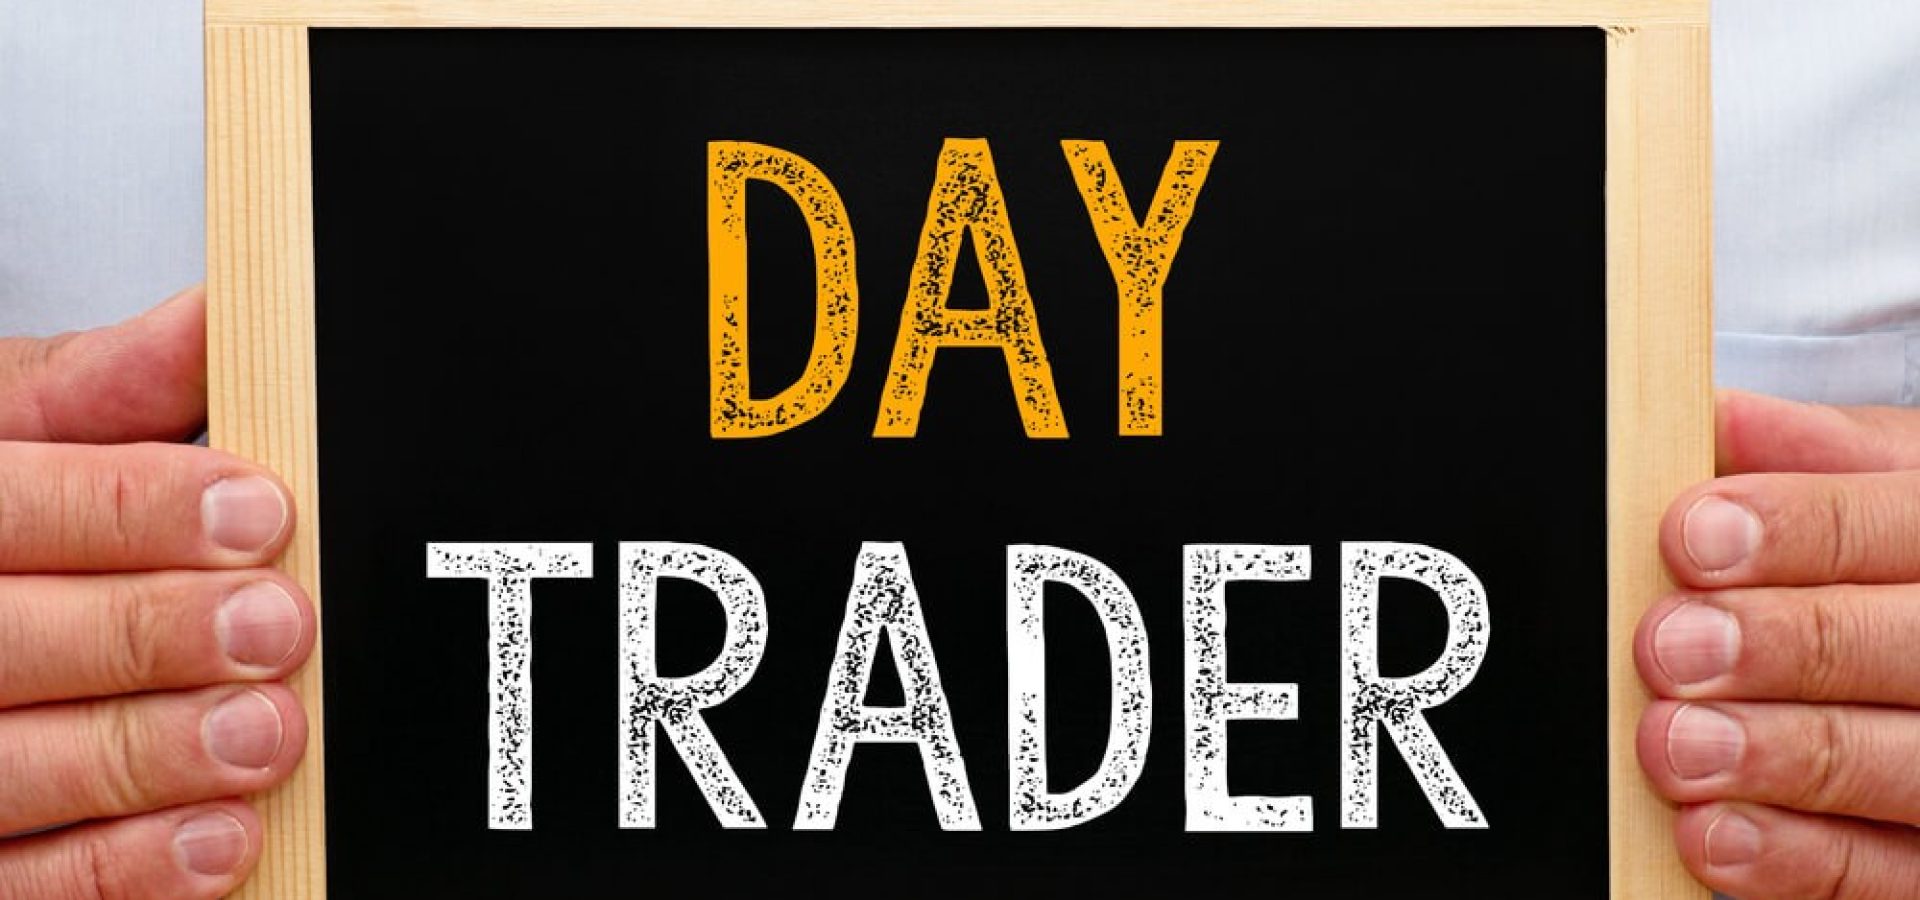 day trader written on board